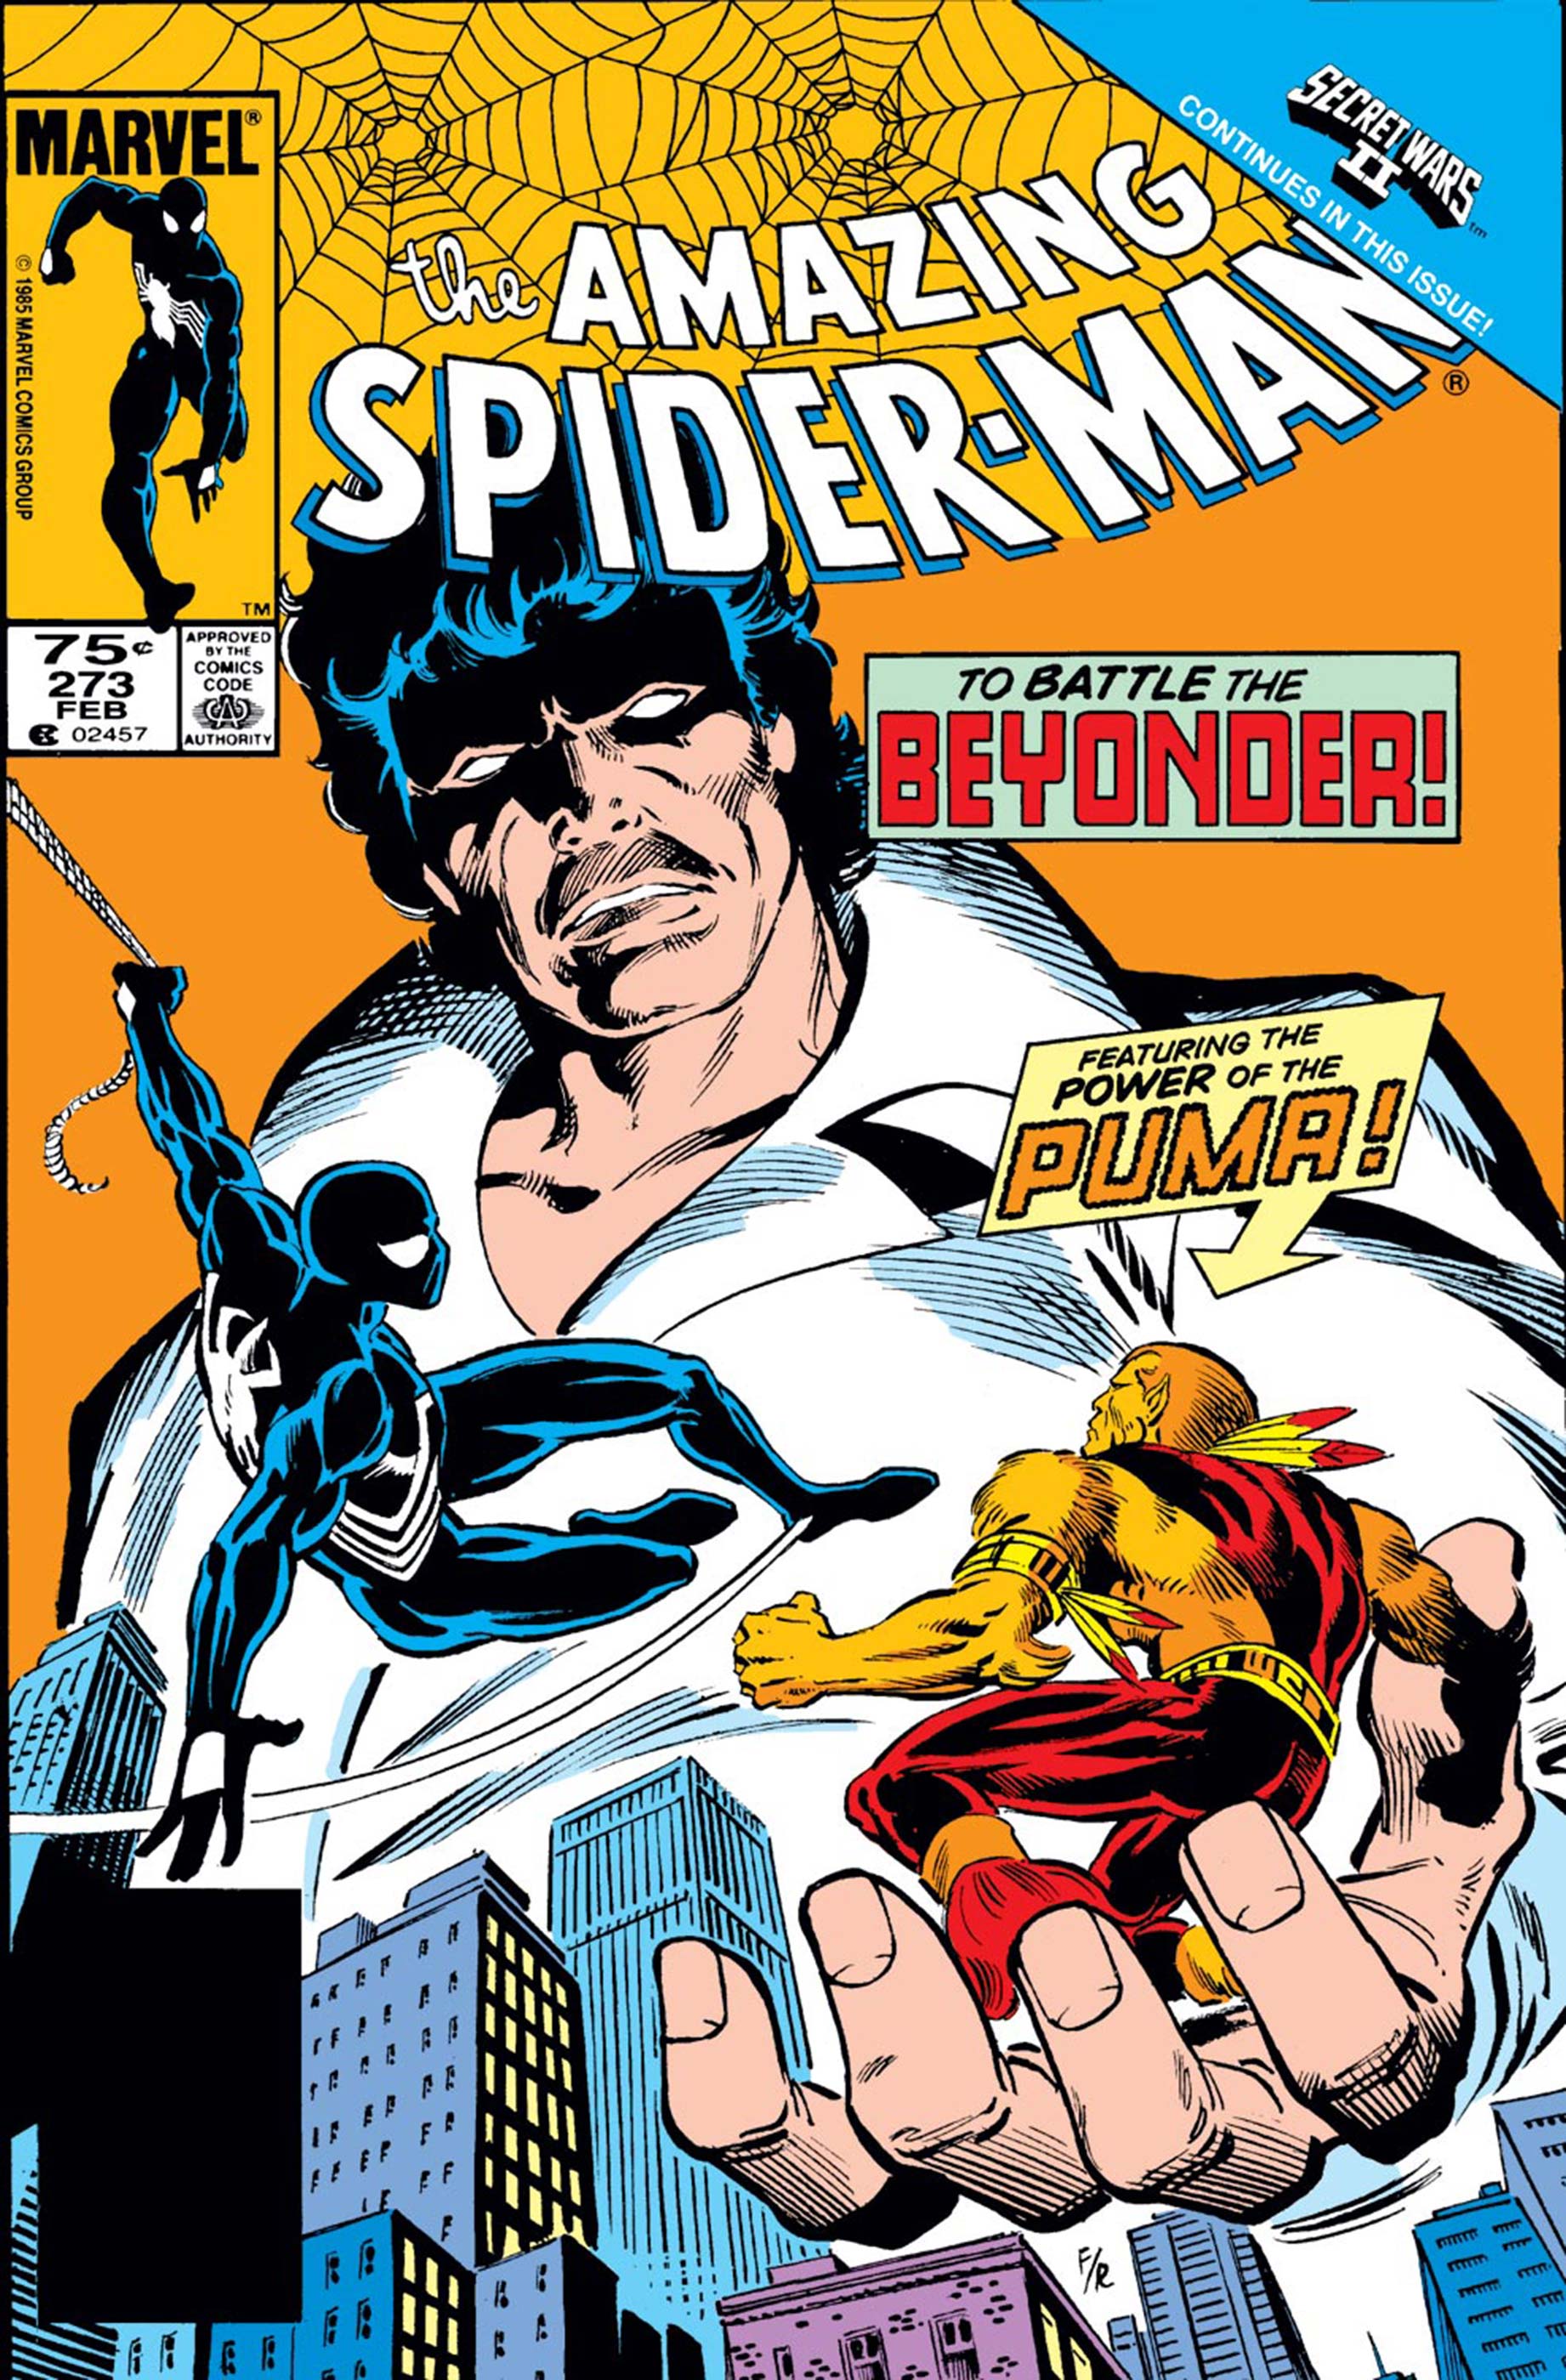 The Amazing Spider-Man (1963) #273